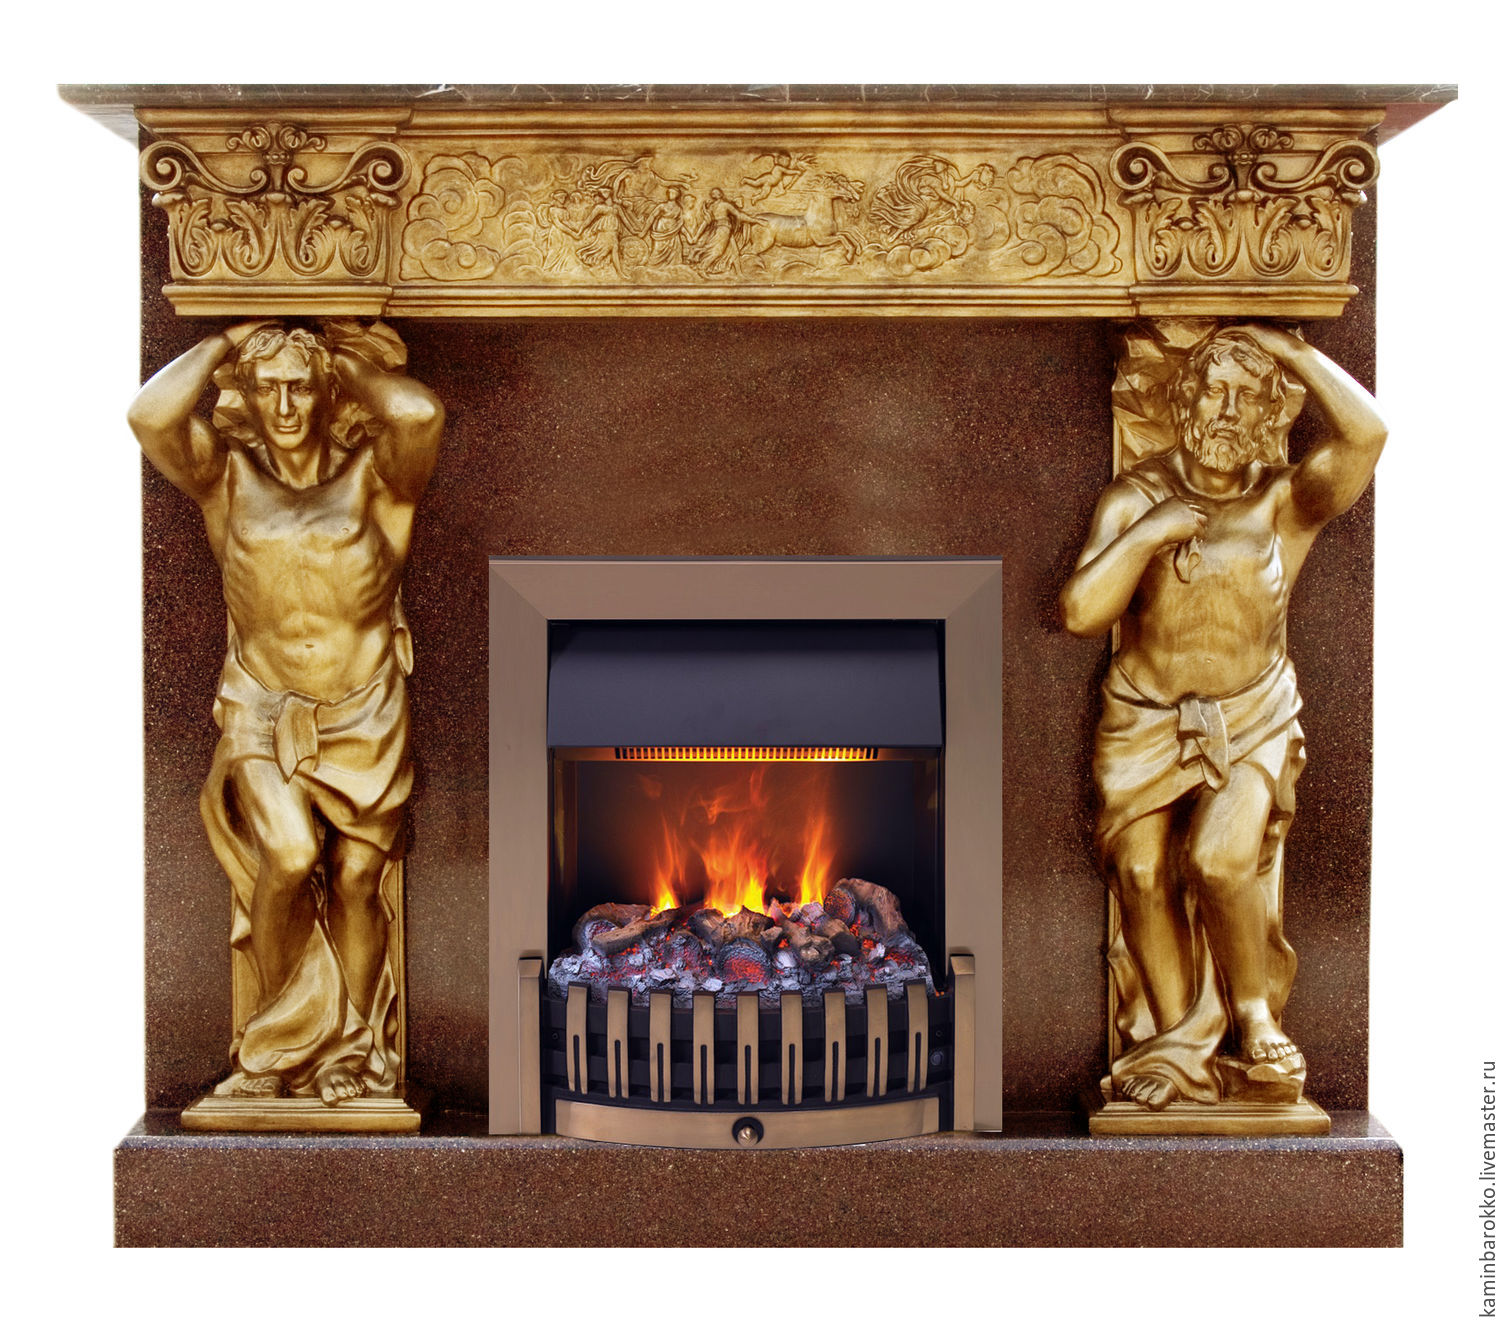 Brass Fireplace Inspirational ÐÐ¾ÑÑÐ°Ð ÐºÐ°Ð¼Ð¸Ð½Ð° Ð¢ÑÐ¸ÑÐ¼Ñ ÐÑÐ Ð°Ð½ÑÐ° Ð¸Ð· ÐÑÐ°Ð¼Ð¾ÑÐ° Ð Ð¾ÑÑÐ¾ ÐÐµÐ²Ð°Ð½ÑÐµ – ÐºÑÐ¿Ð¸ÑÑ Ð½Ð° Ð¯ÑÐ¼Ð°ÑÐºÐµ ÐÐ°ÑÑÐµÑÐ¾Ð² – 9wsrbru